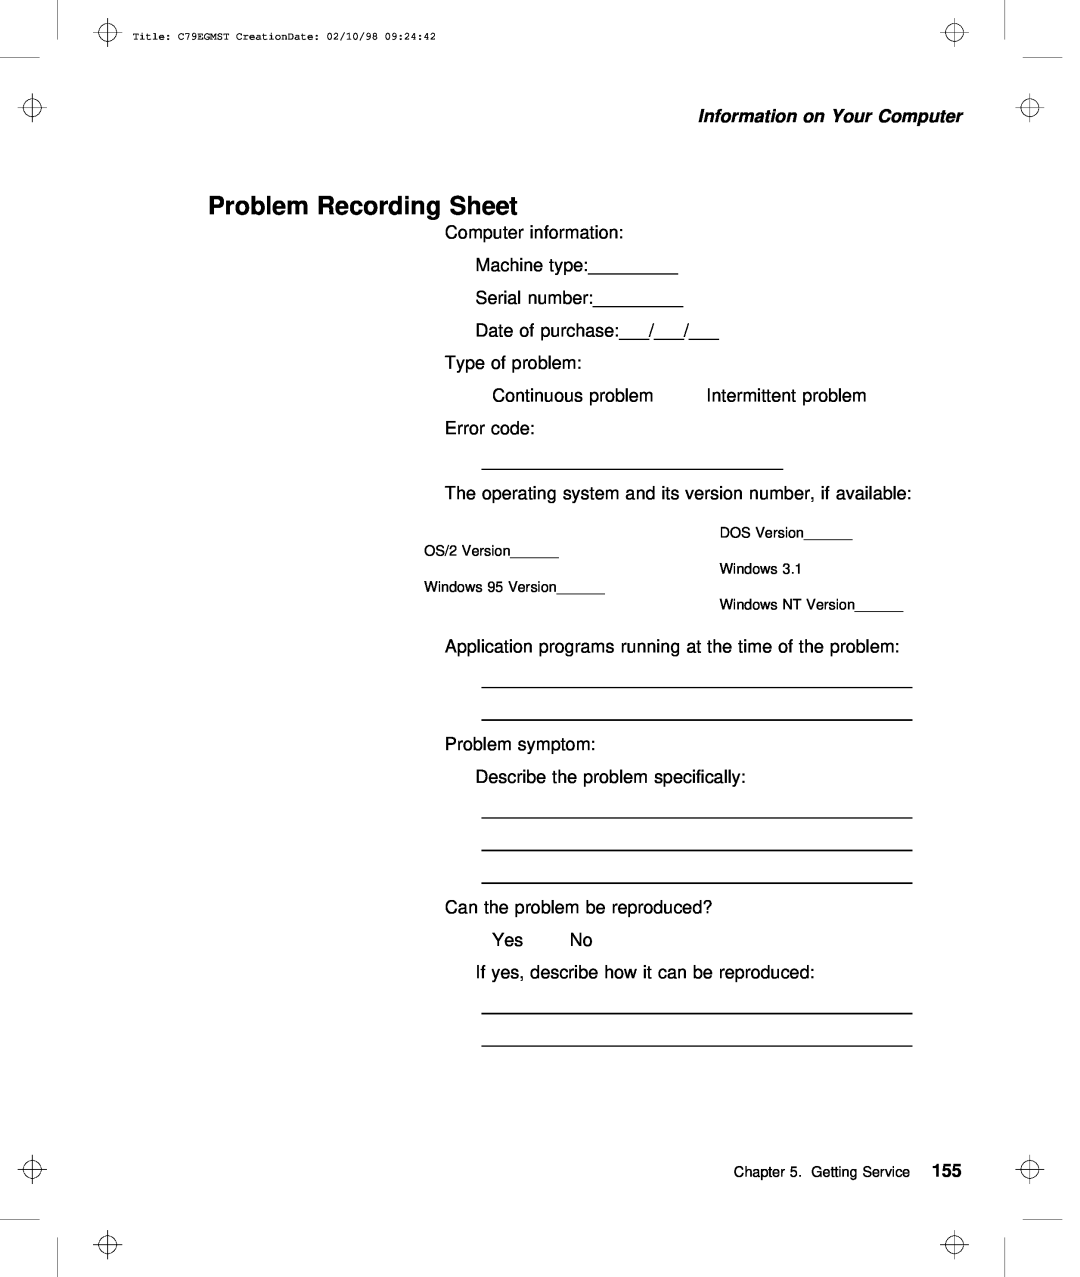 IBM C79EGMST manual Problem Recording Sheet, Information on Your Computer, Windows 